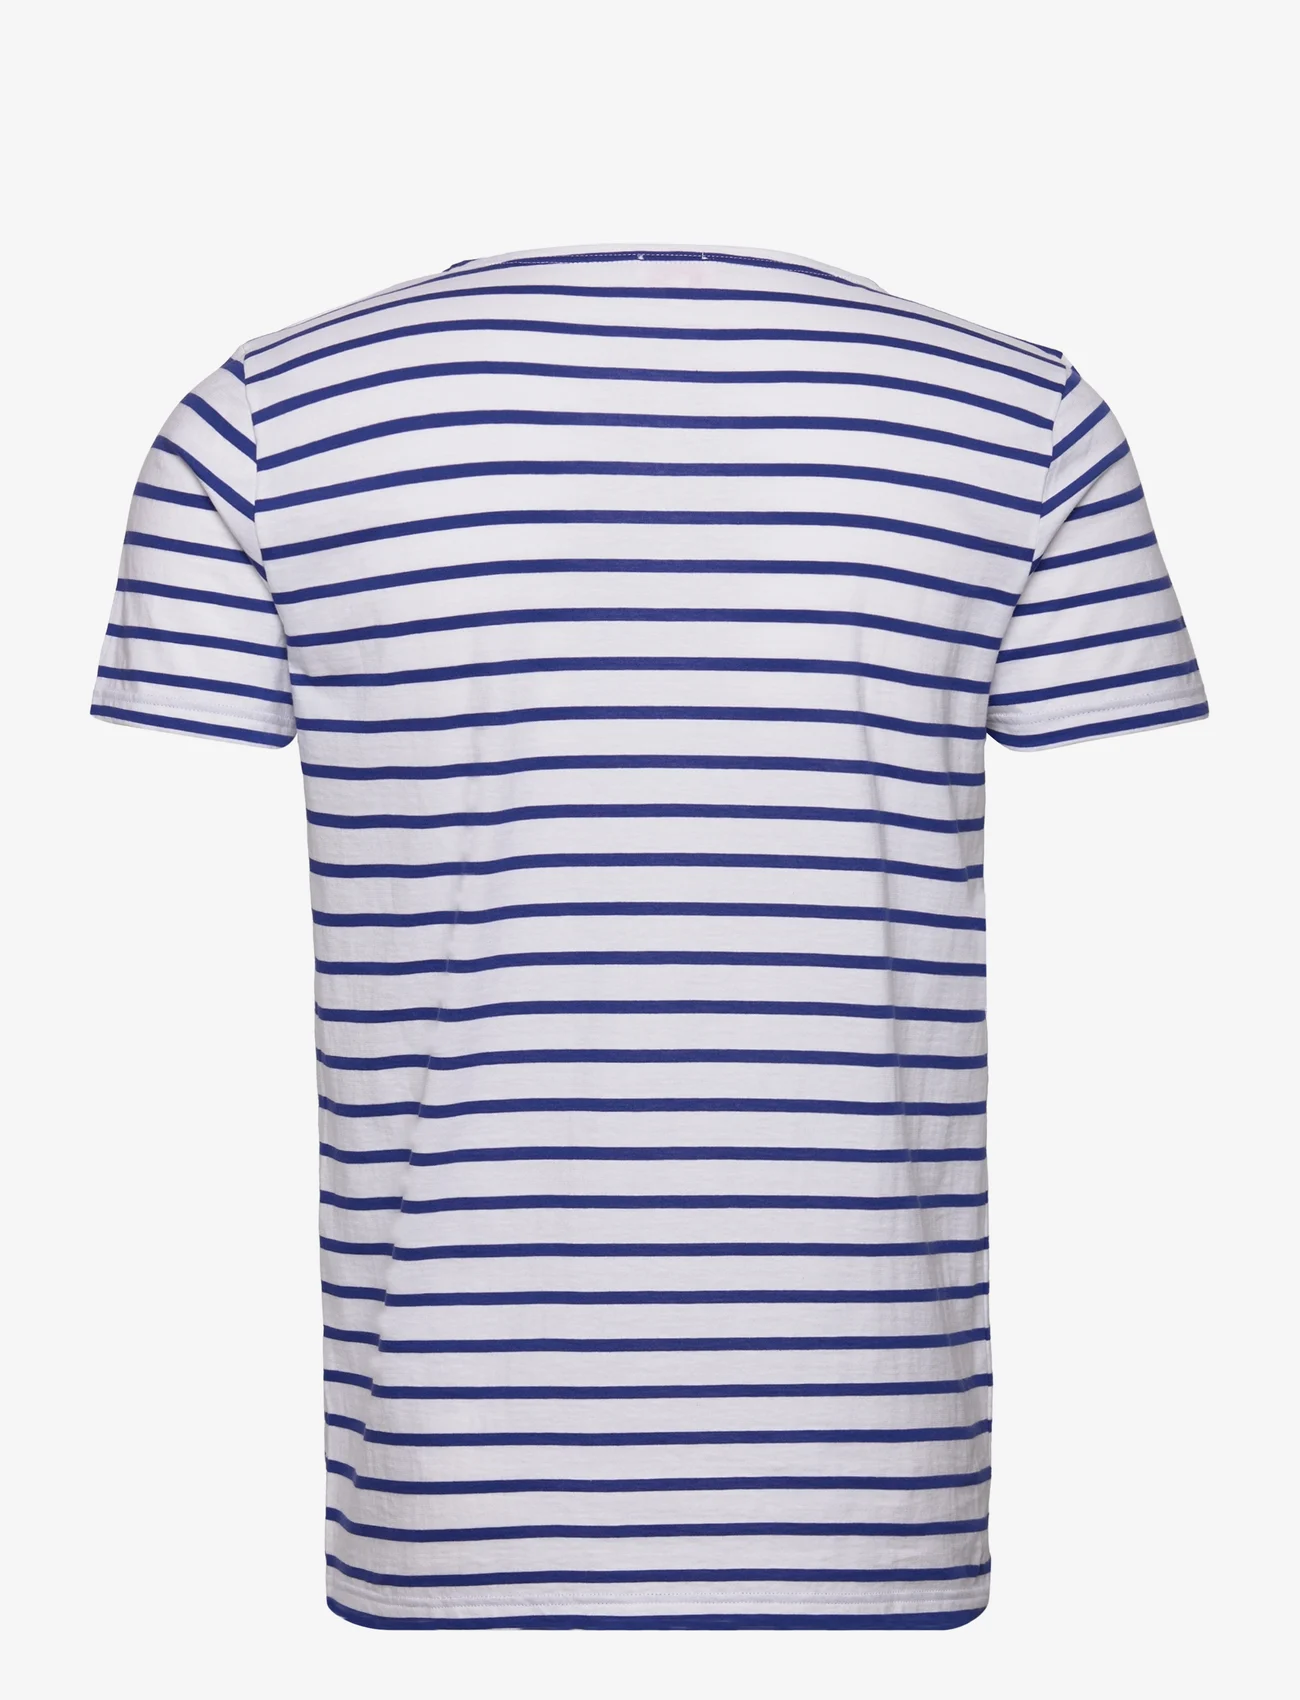 Armor Lux - Breton Striped Shirt Héritage - kurzärmelige - blanc/etoile - 1